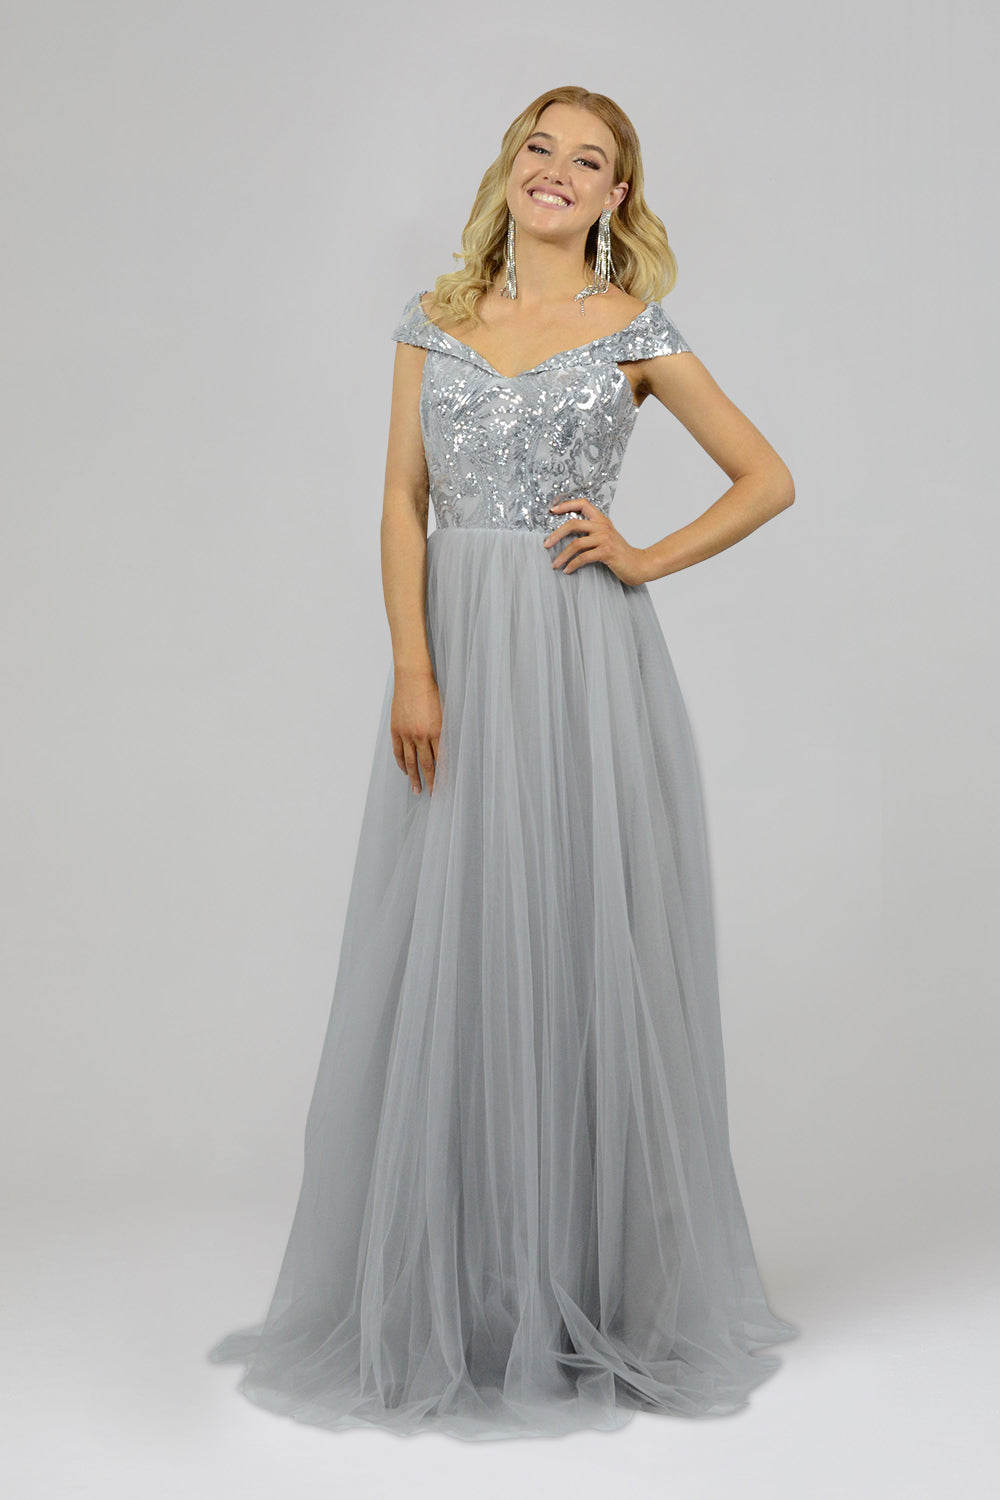 tulle fabric silver formal ball dresses australia online envious bridal & formal